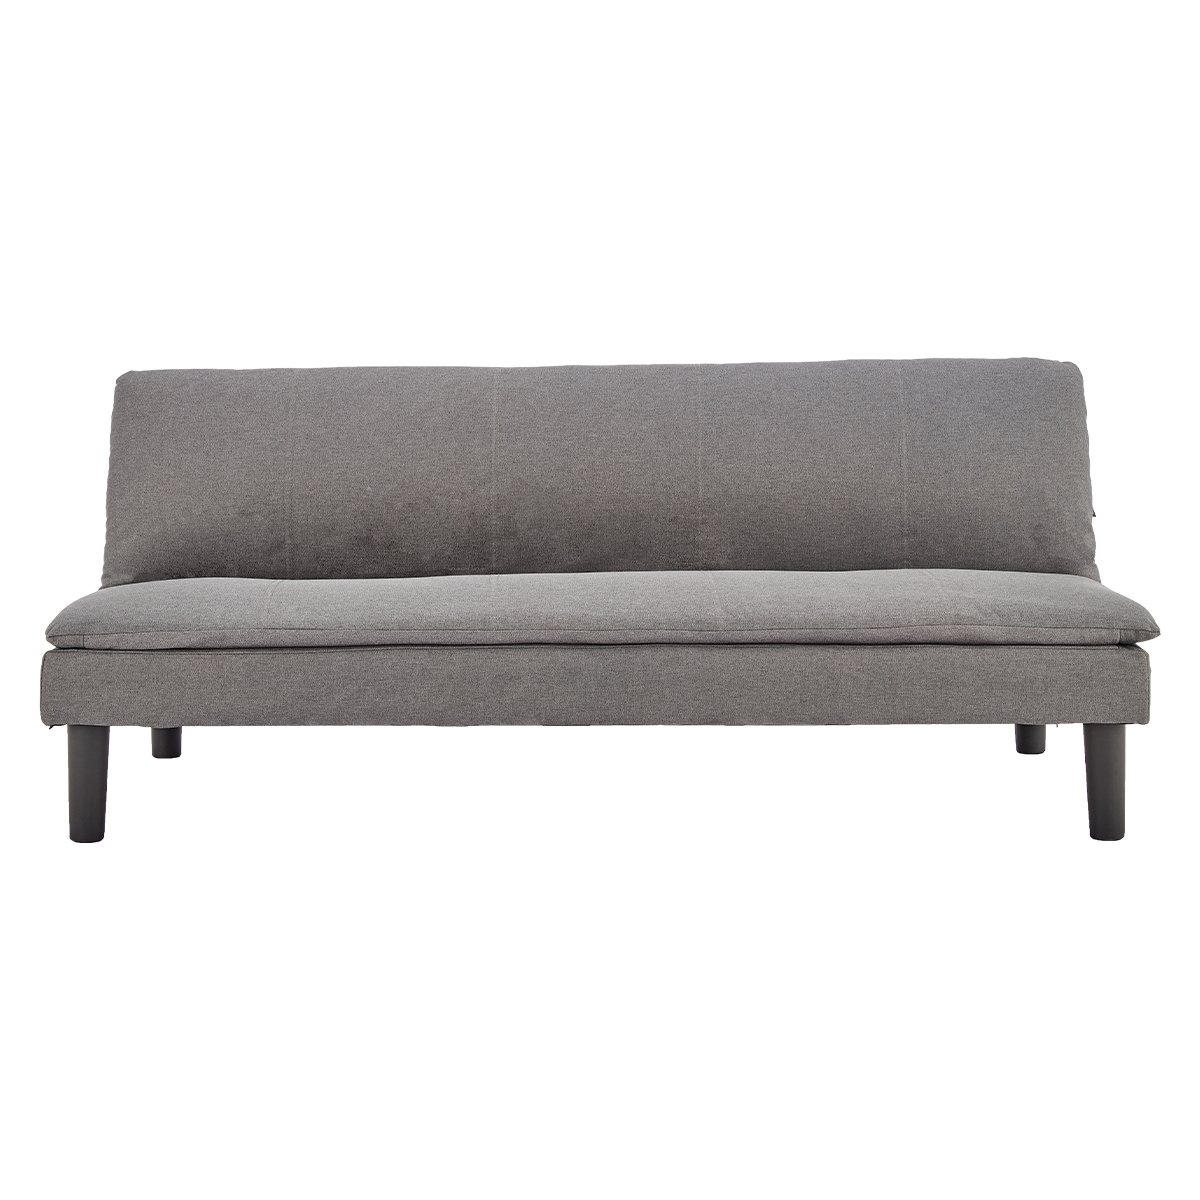 Sarantino 3 Seater Modular Faux Linen Fabric Sofa Bed Couch -Dark Grey 1